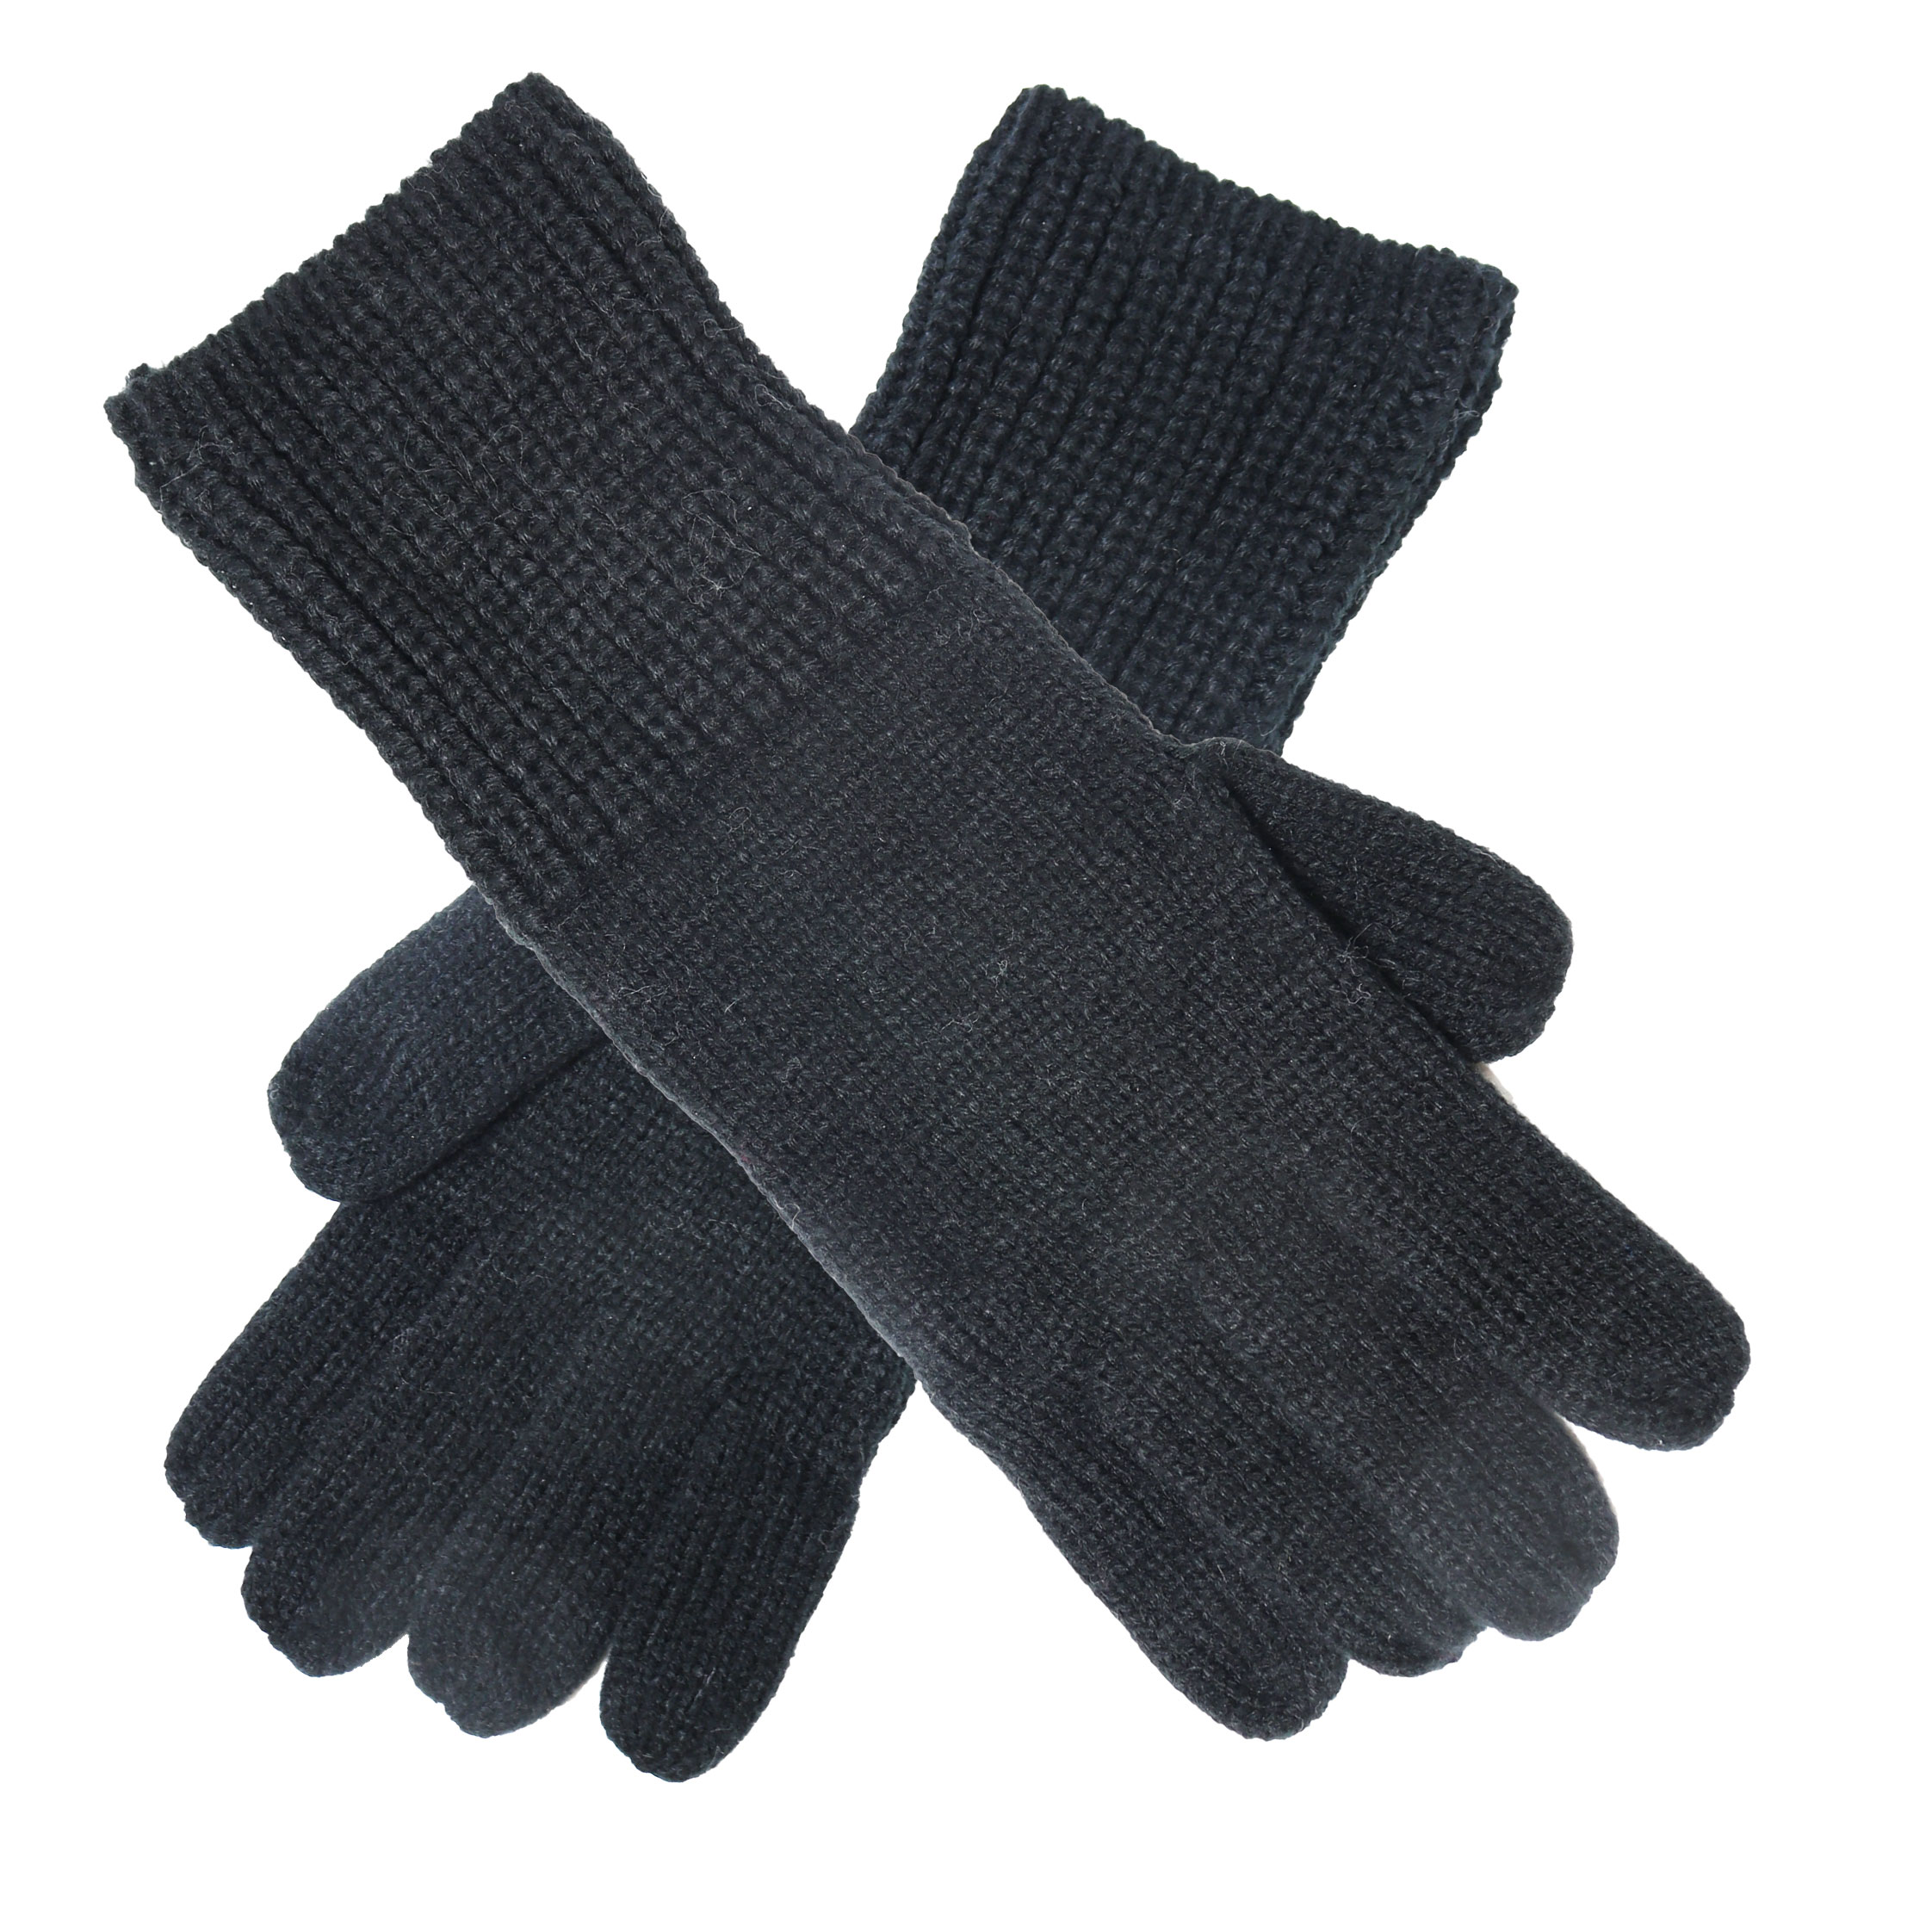 Black knit gloves - Wicked Sista | Cosmetic Bags, Jewellery, Hair ...